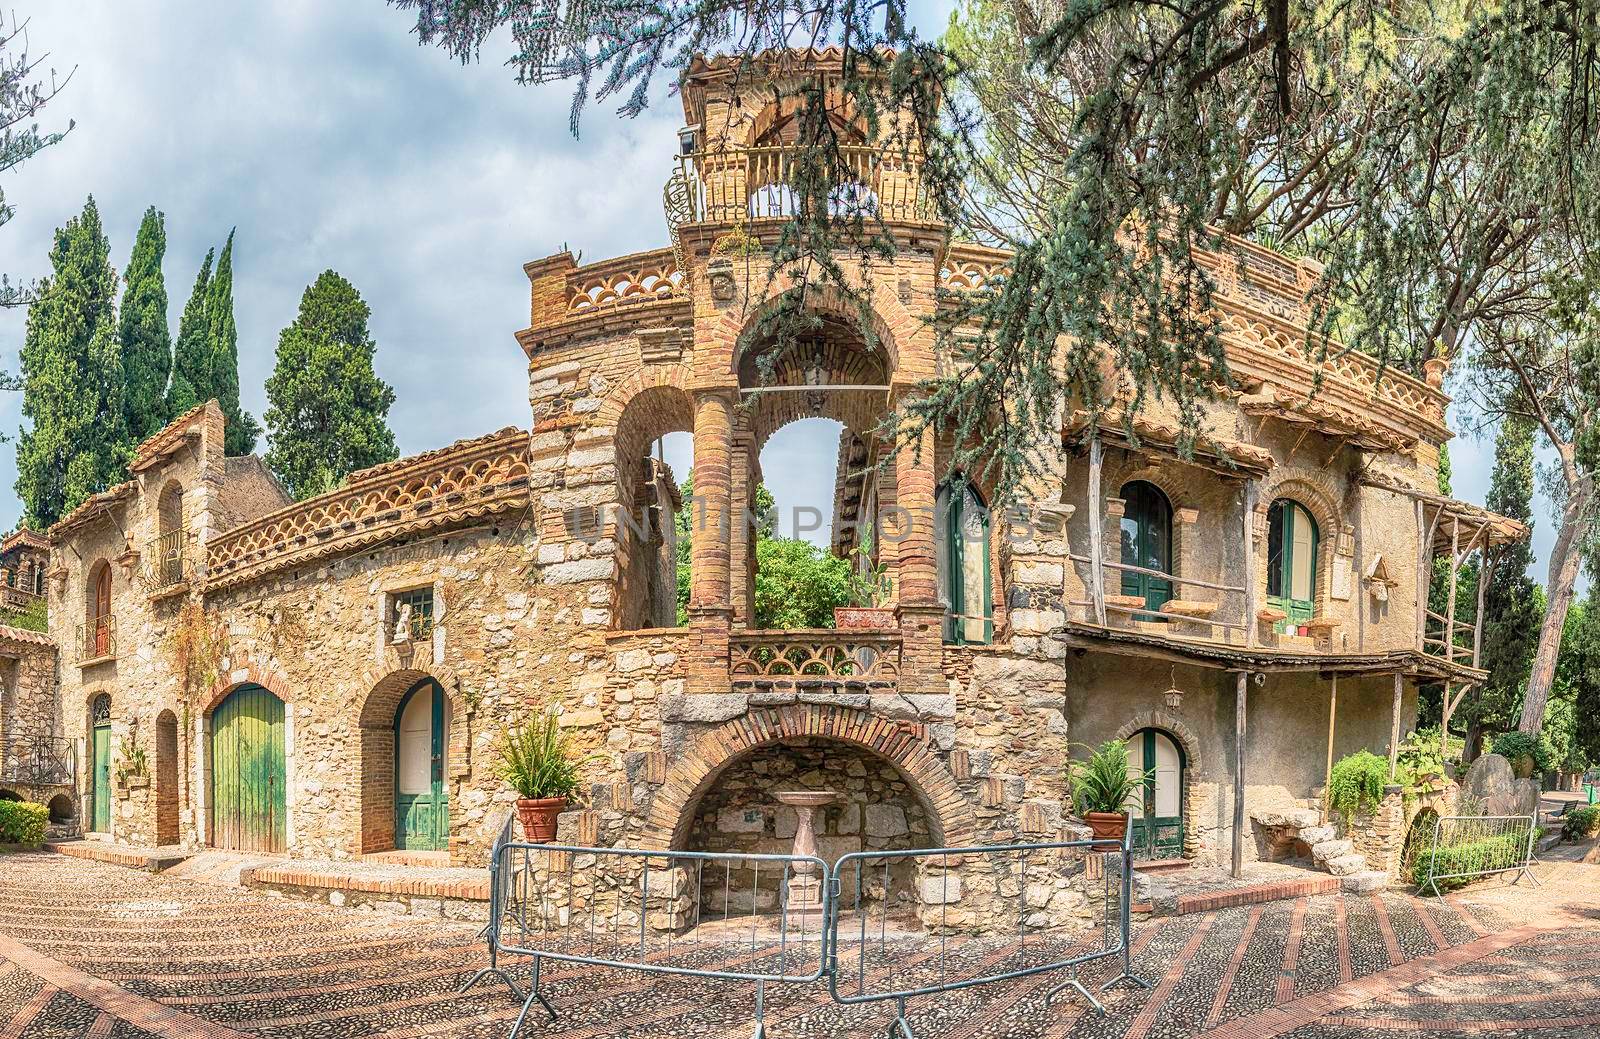 Historic pavilion inside the beautiful public garden, one of the main citysights of Taormina, Sicily, Italy